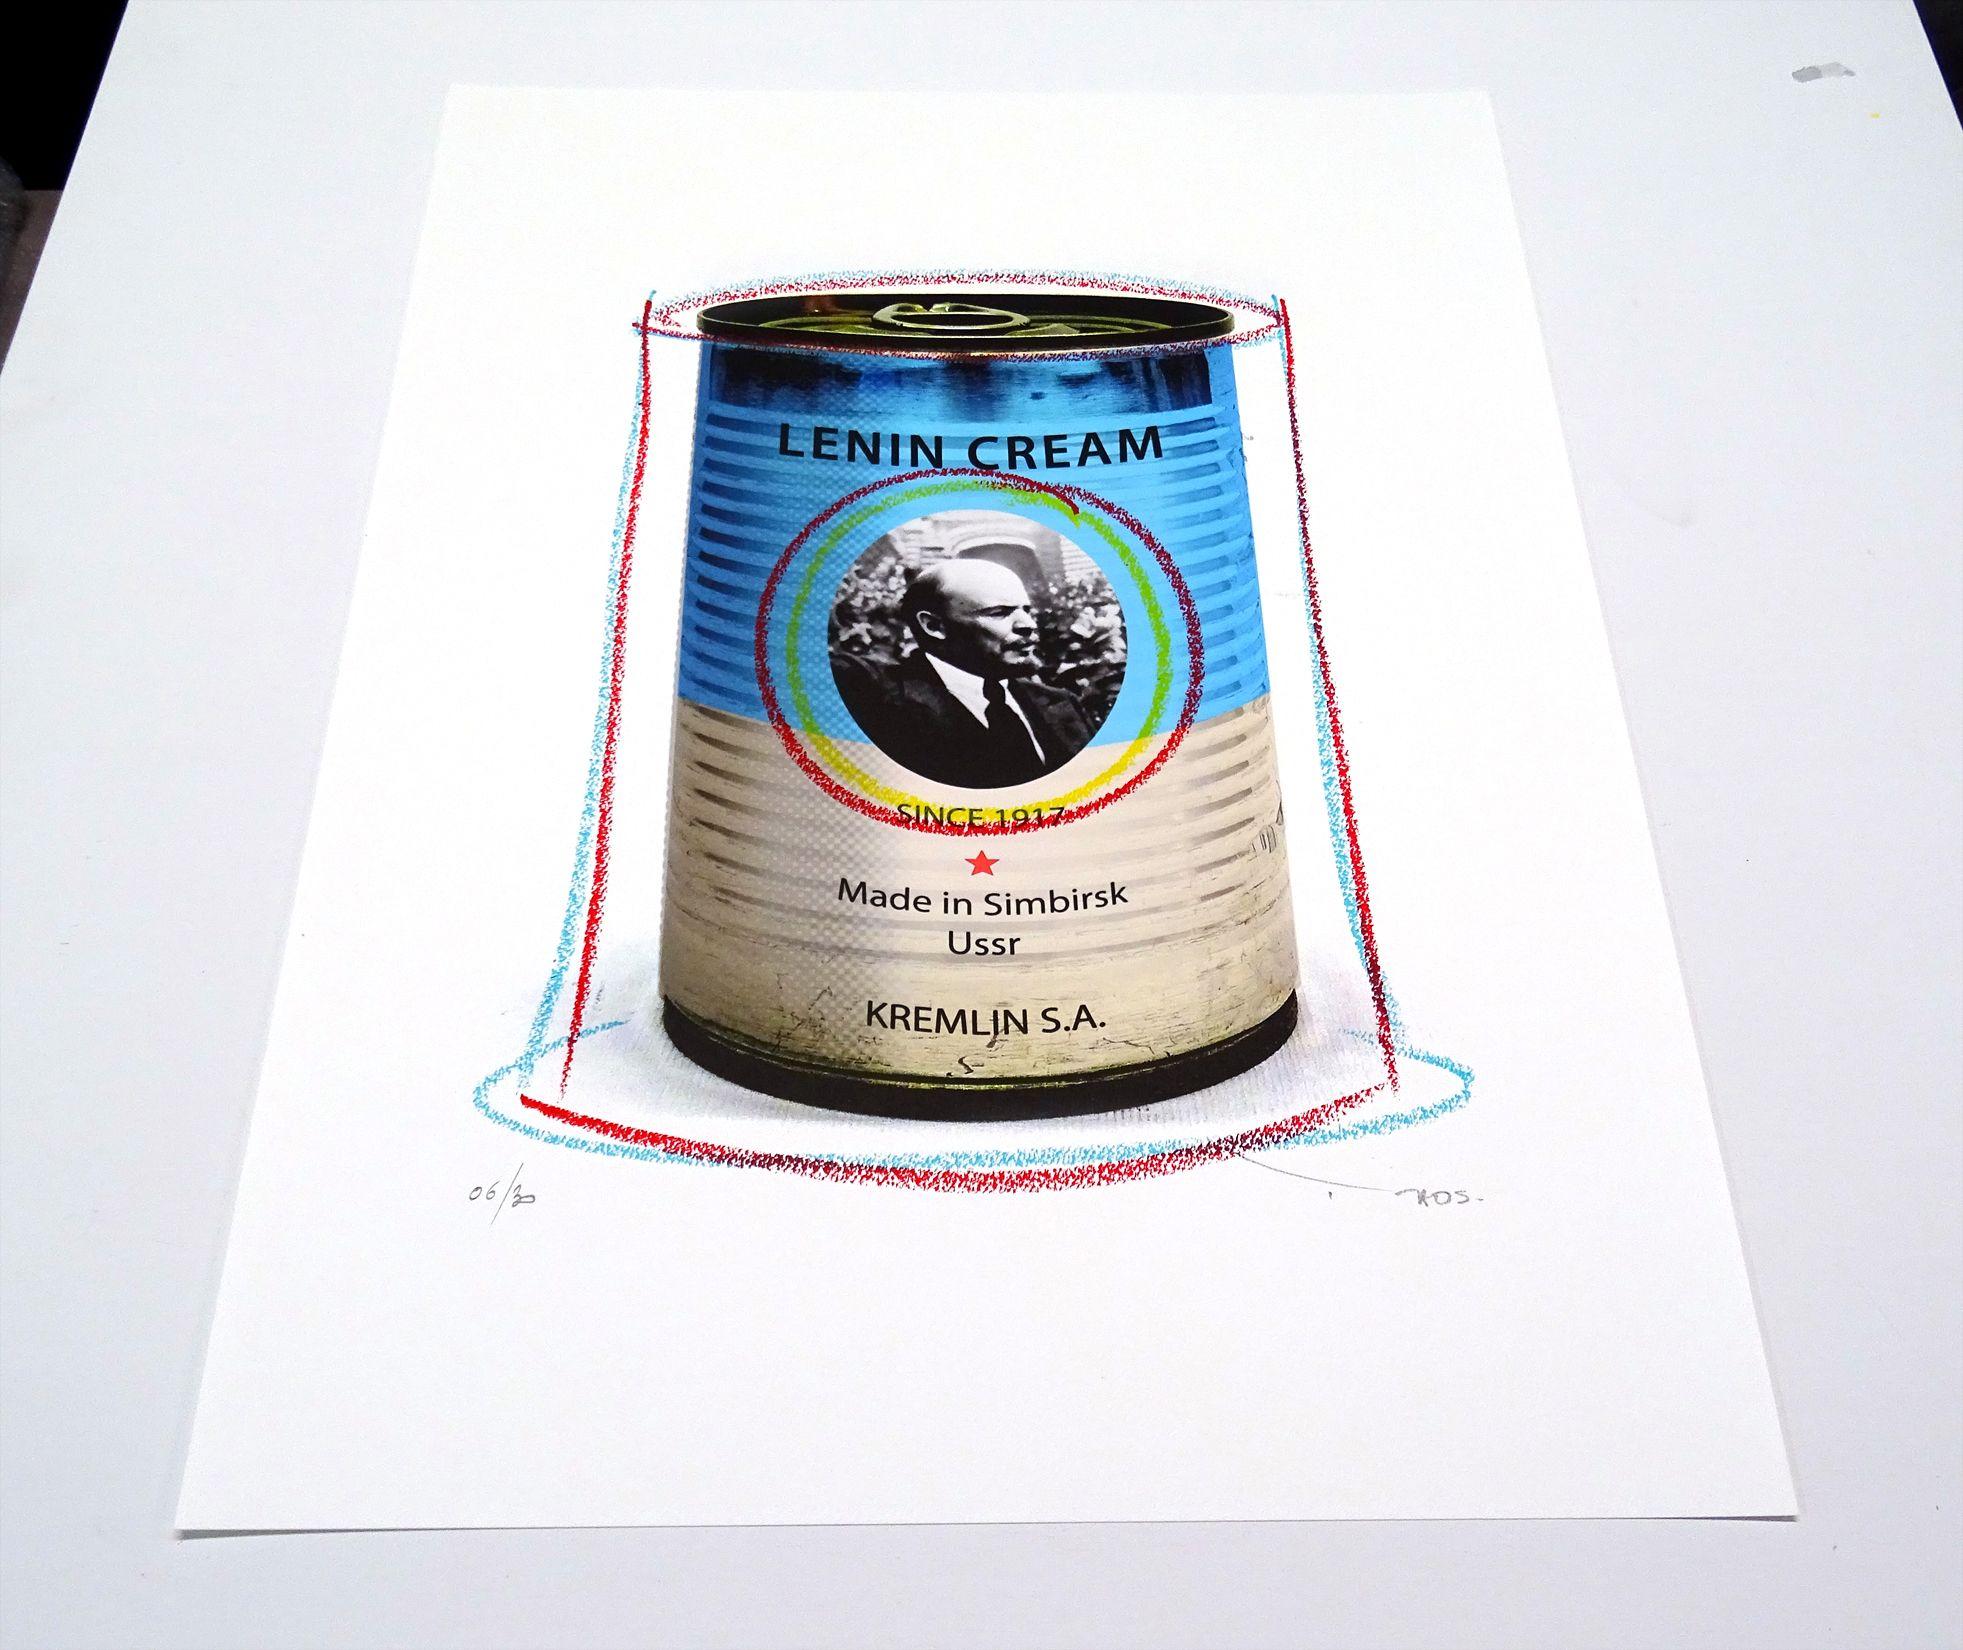 Tehos Lenin cream, Mixed Media on Paper - Pop Art Mixed Media Art by Tehos Frederic Camilleri